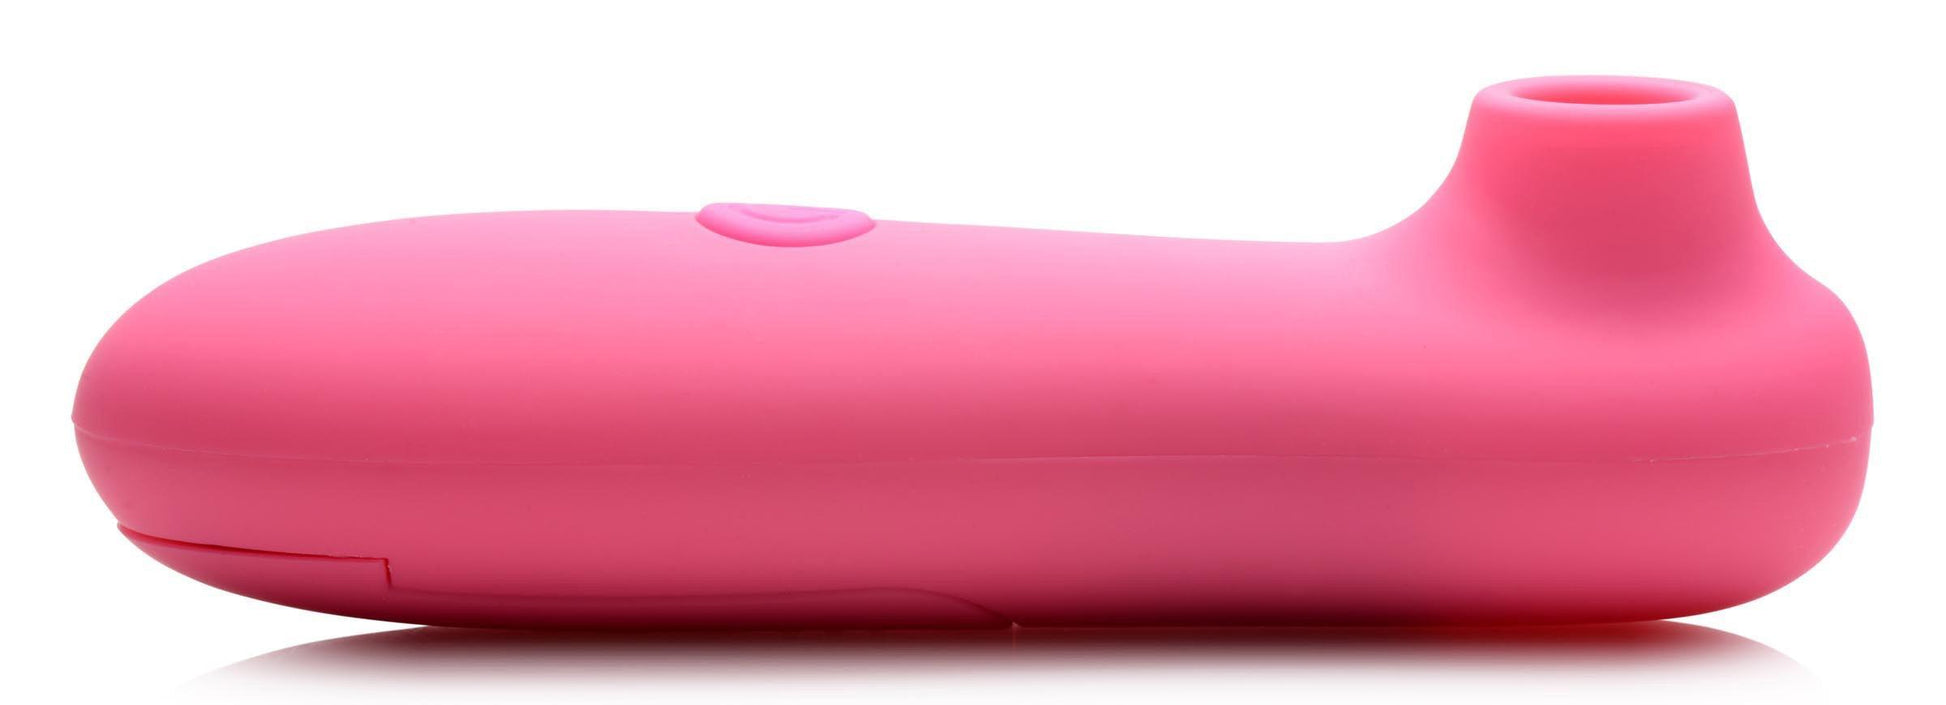 Shegasm Travel Sidekick 10x Suction Clit Stimulator - Pink - My Sex Toy Hub